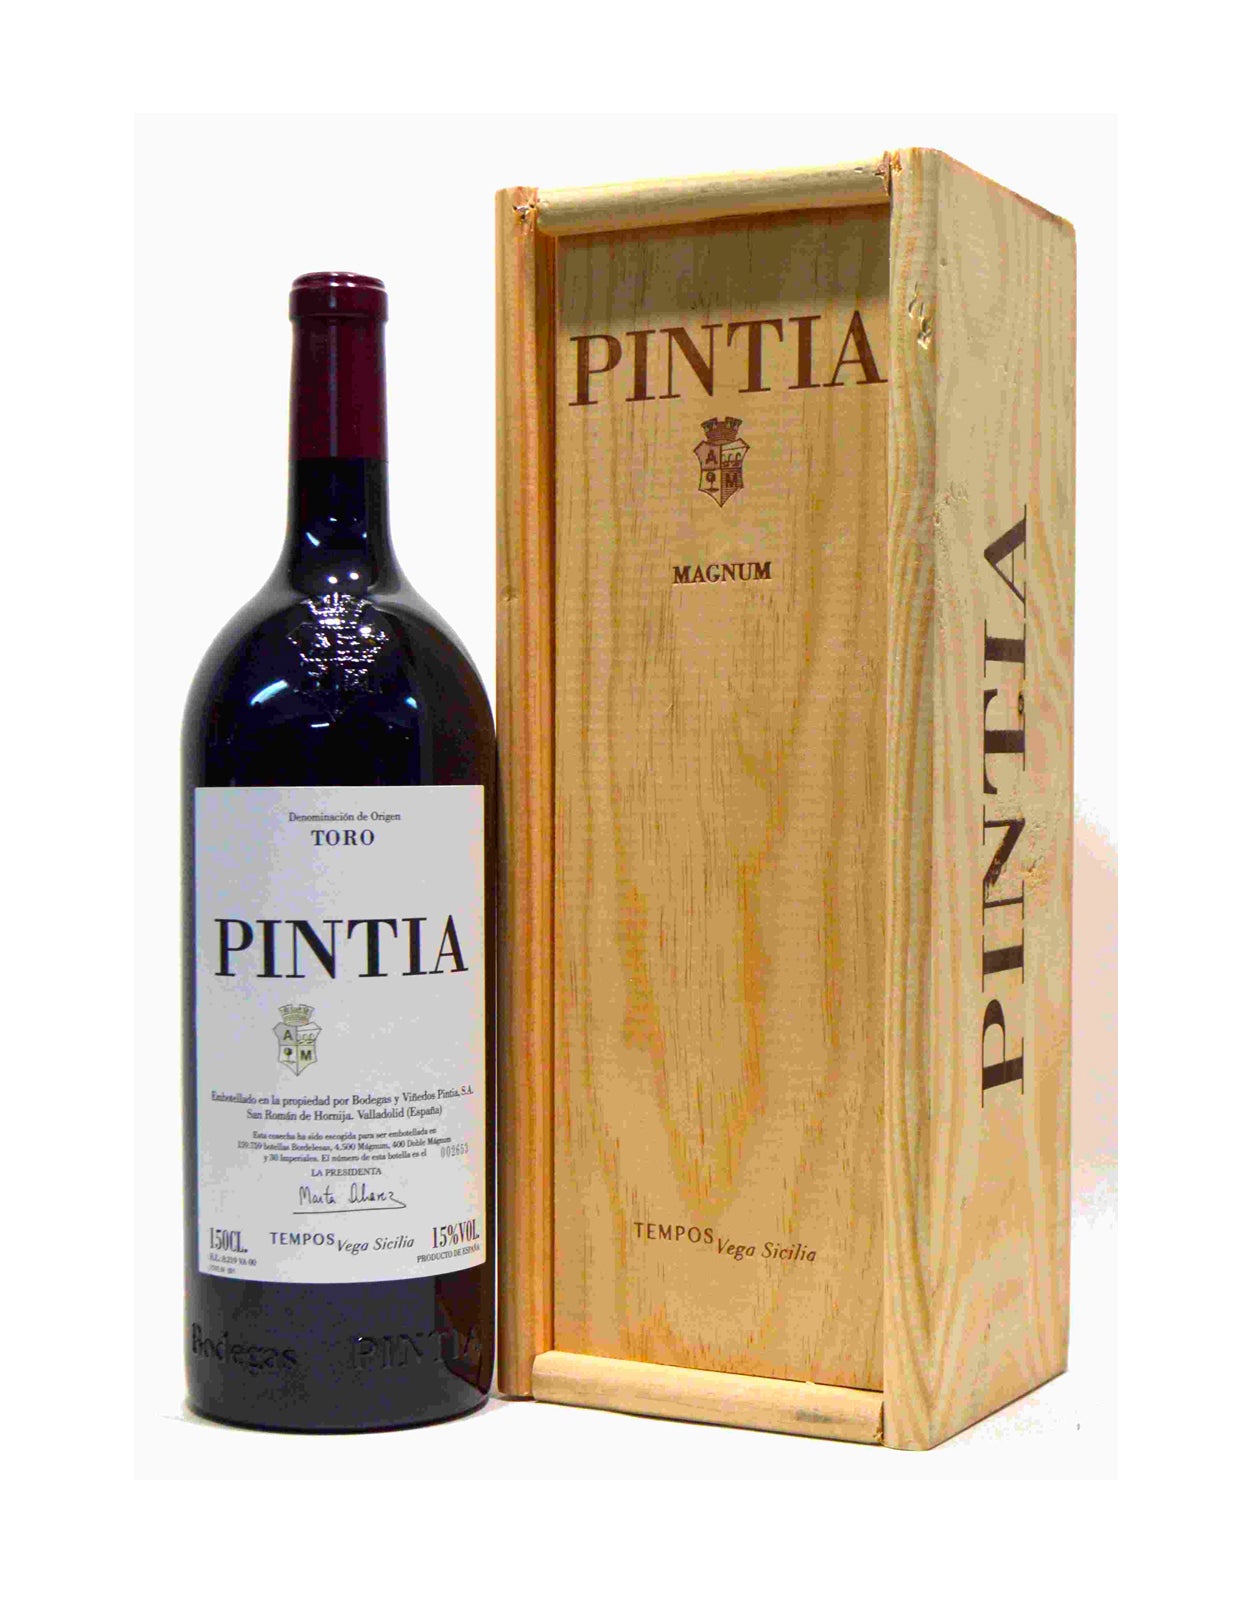 Bodegas y Vinedos Pintia 2017 - 1.5 Litre Bottle